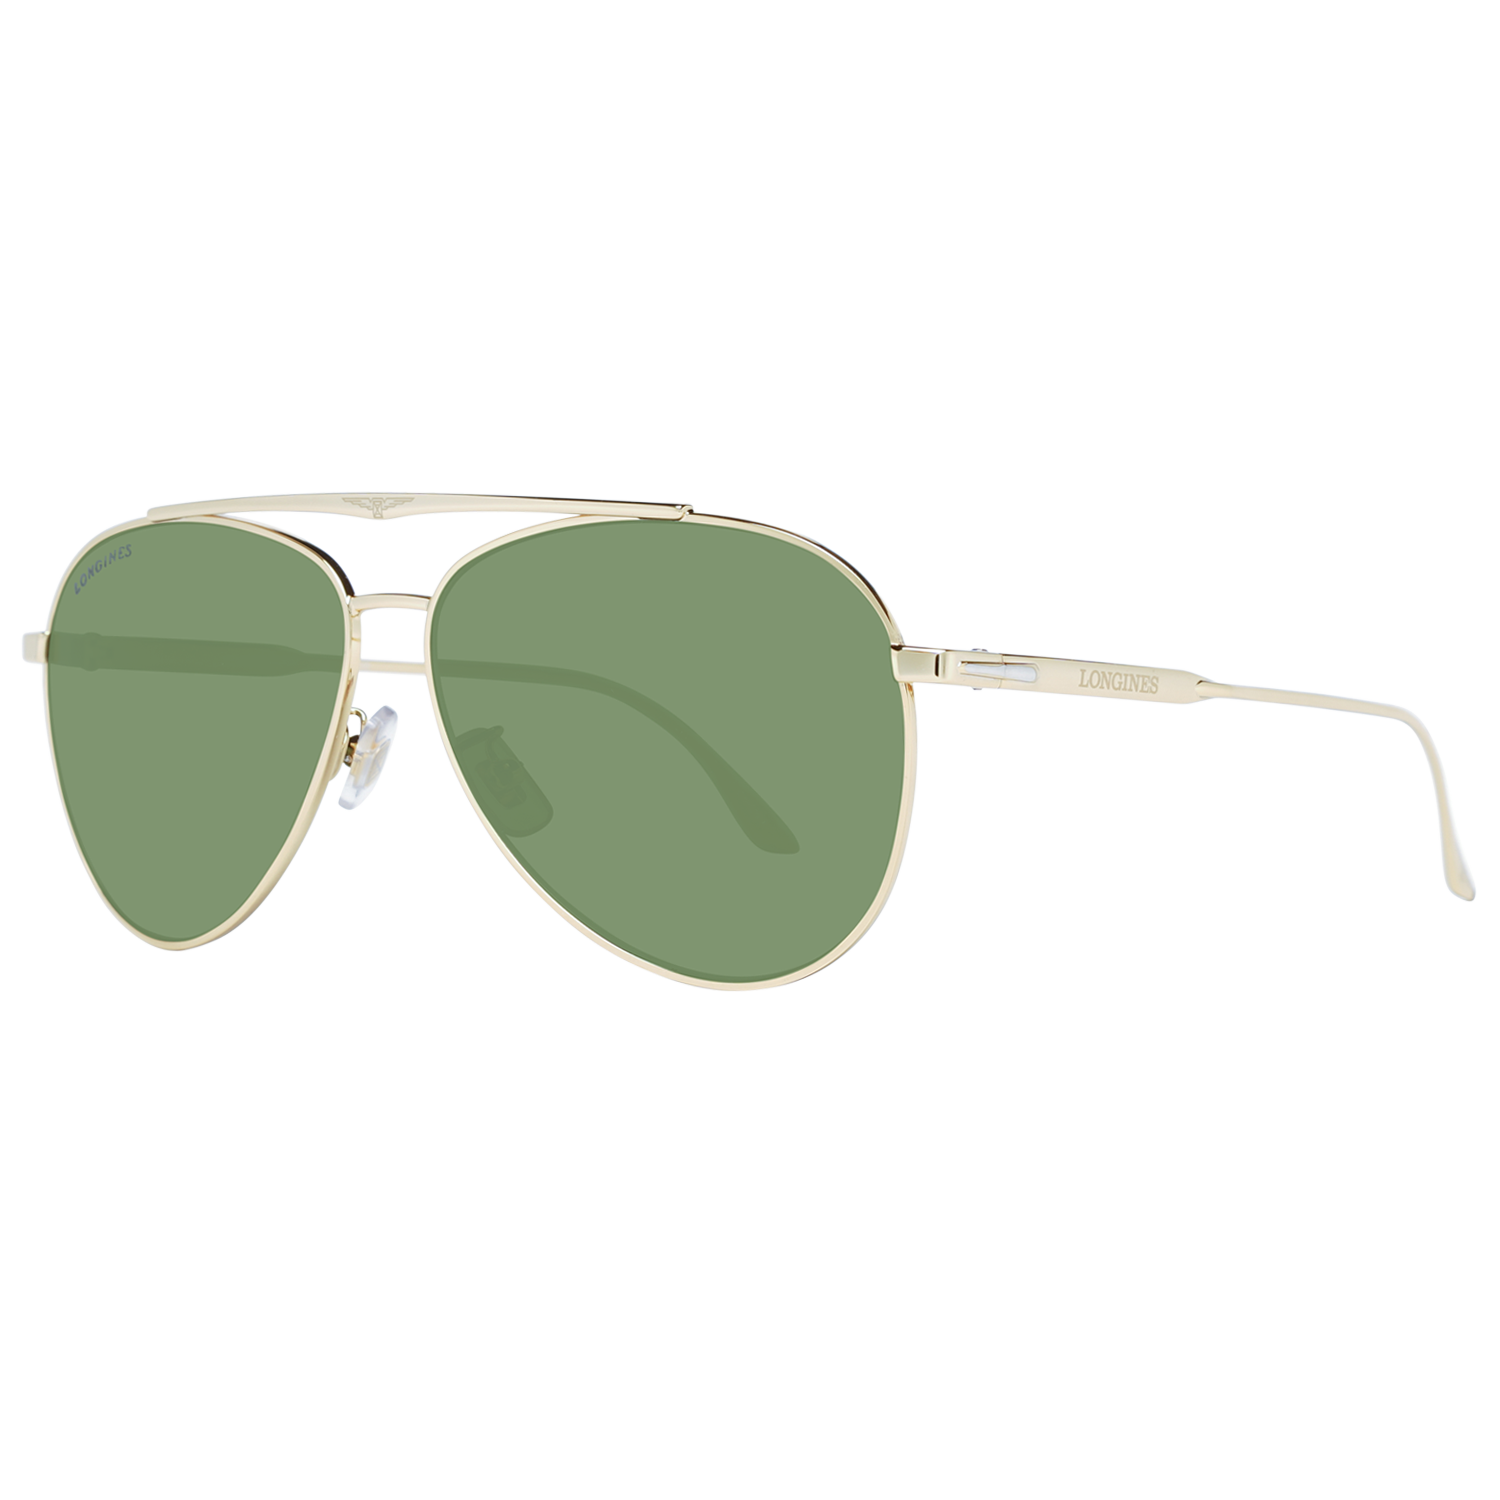 Longines Sunglasses Longines Sunglasses LG0005-H 30N 59mm Eyeglasses Eyewear UK USA Australia 